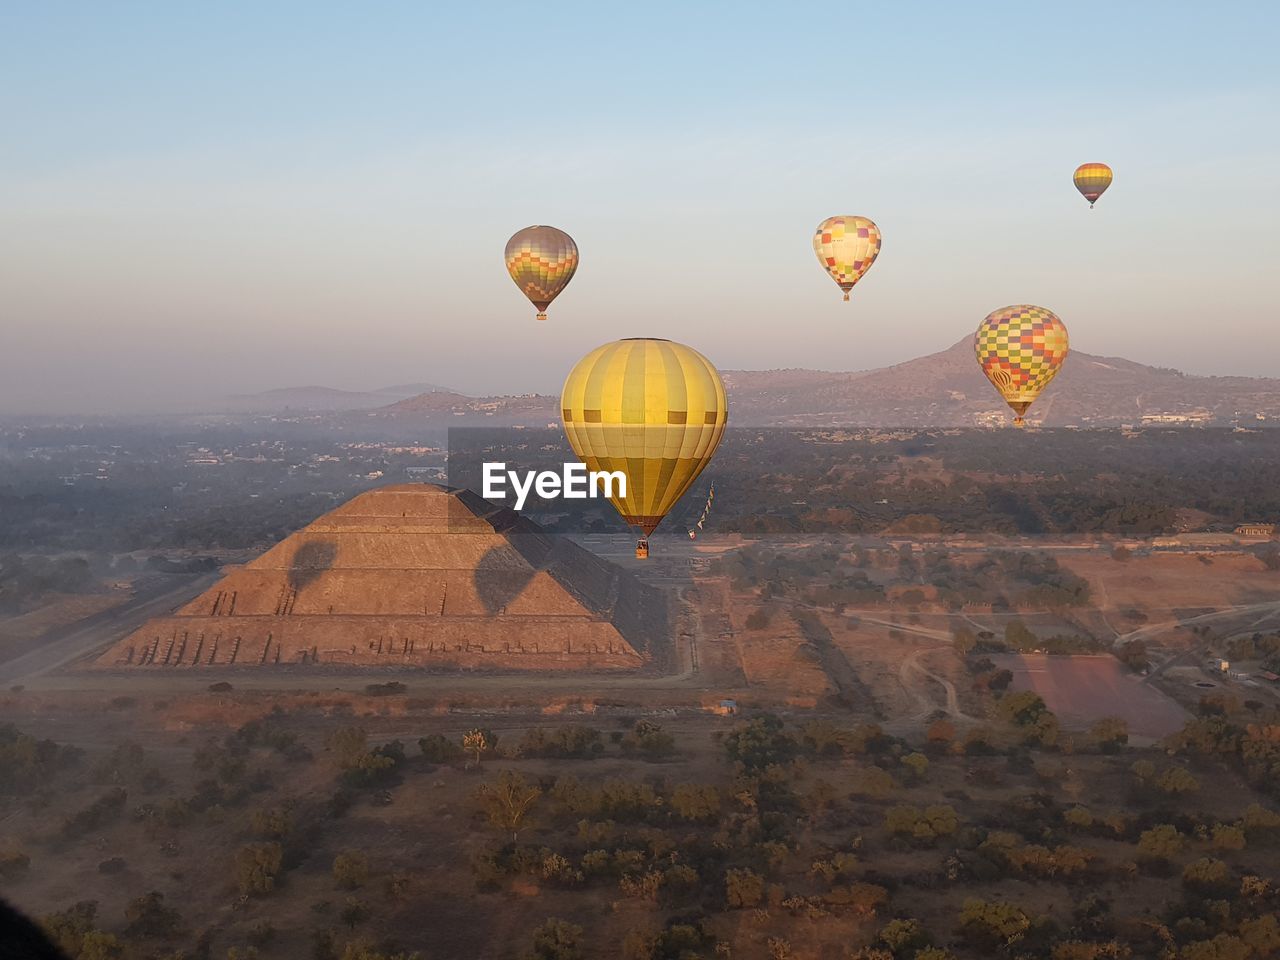 Hot air balloons flying over ancient pyramid